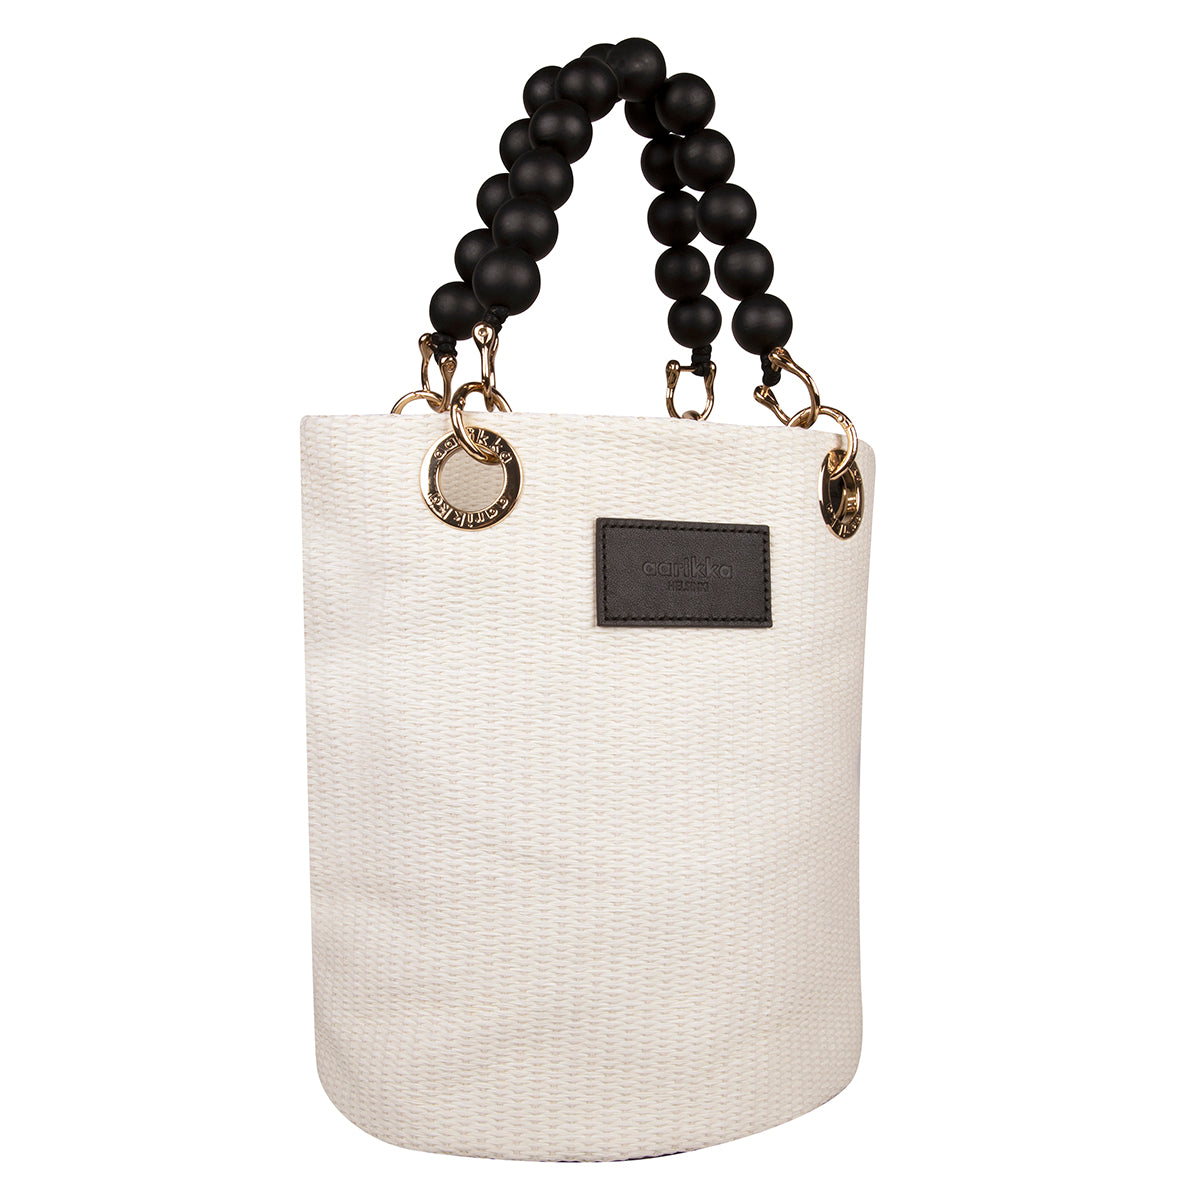 Laura basket bag, ecru and black